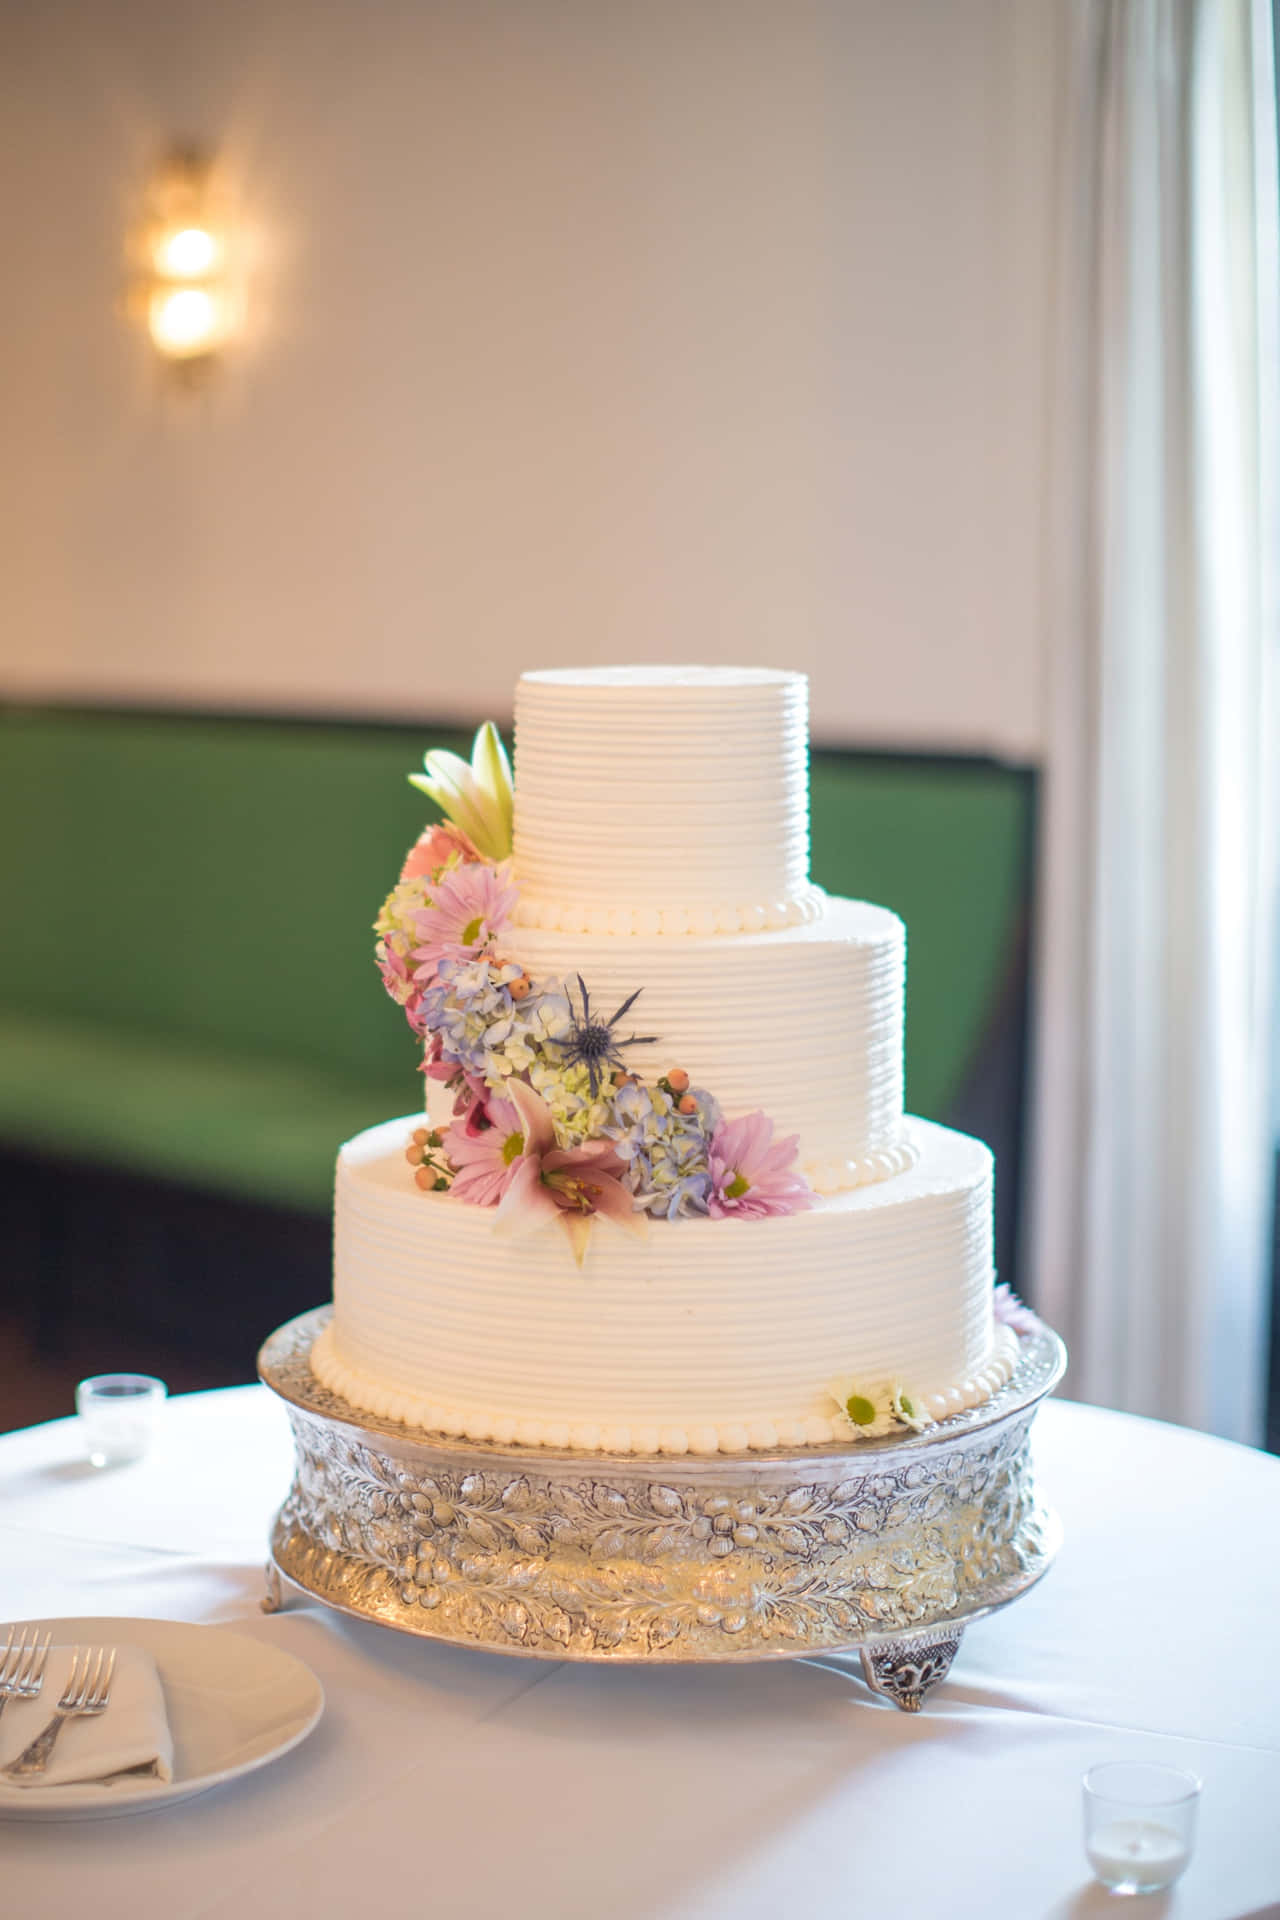 A White Wedding Cake On A Table